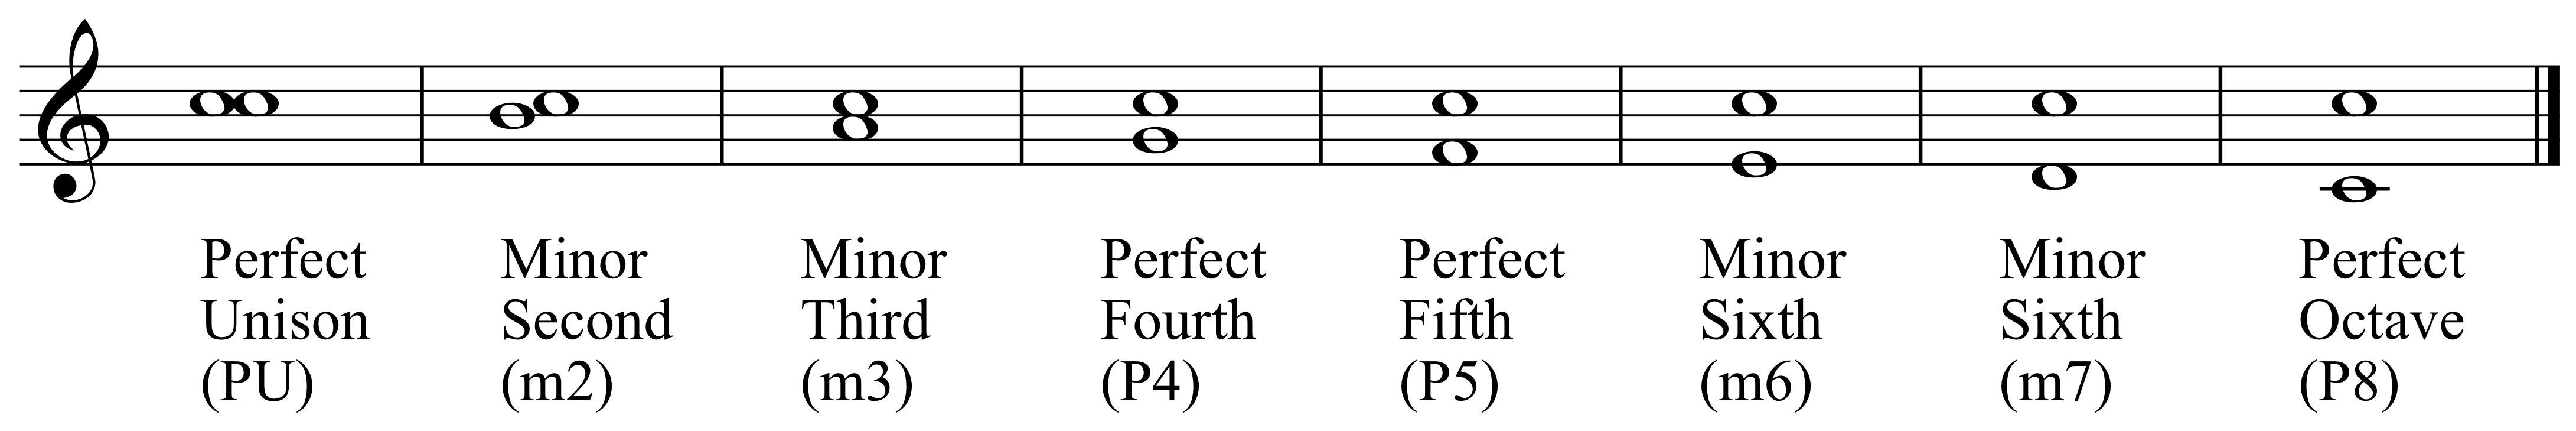 harmonic-intervals-chart